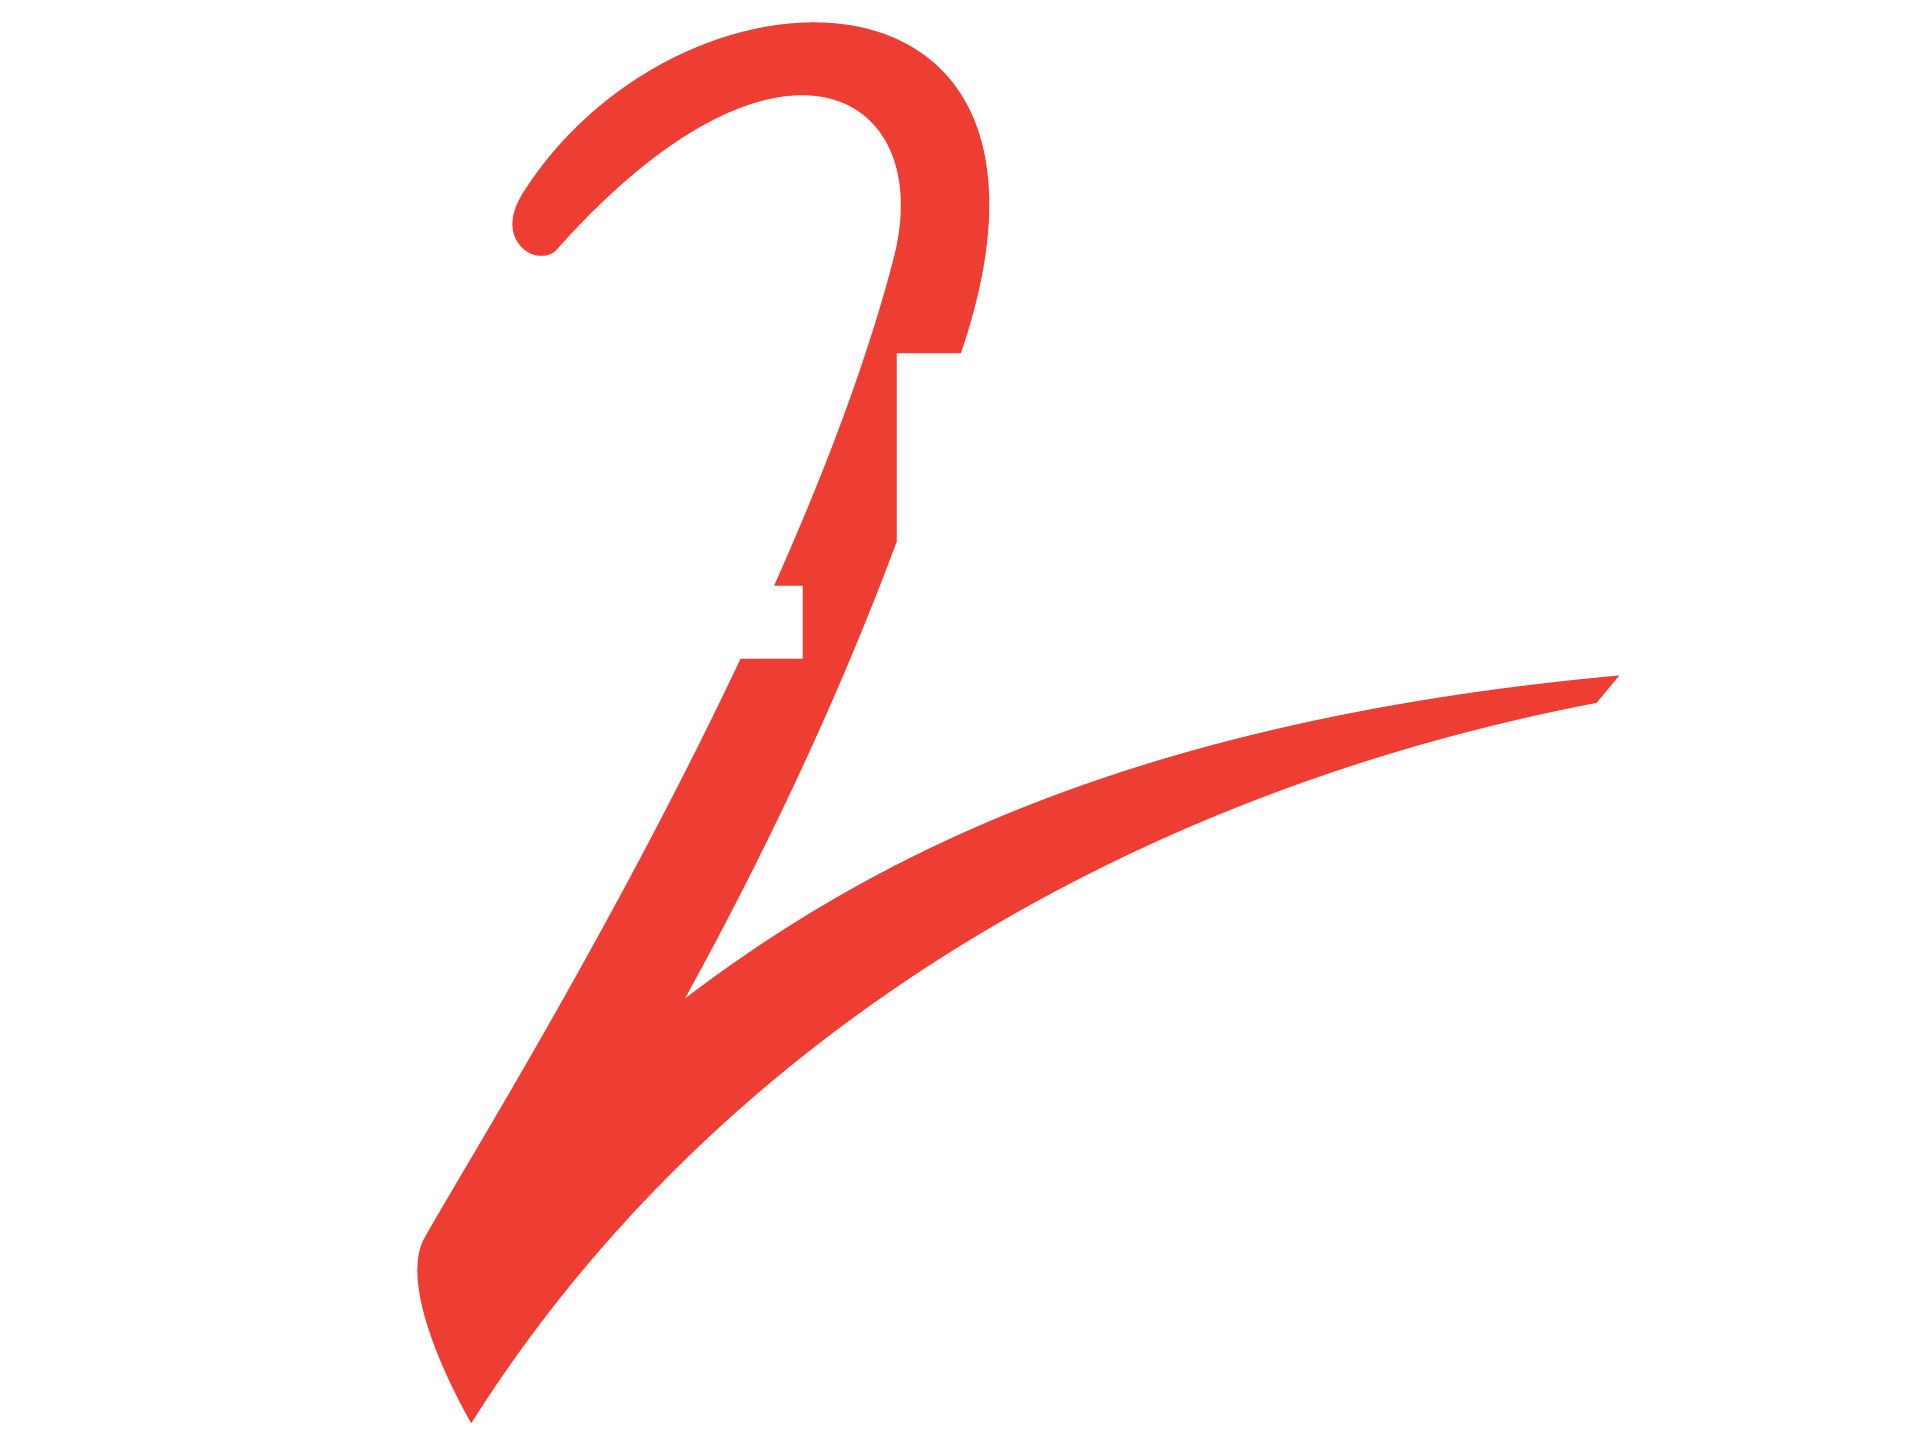 Internet2 logo